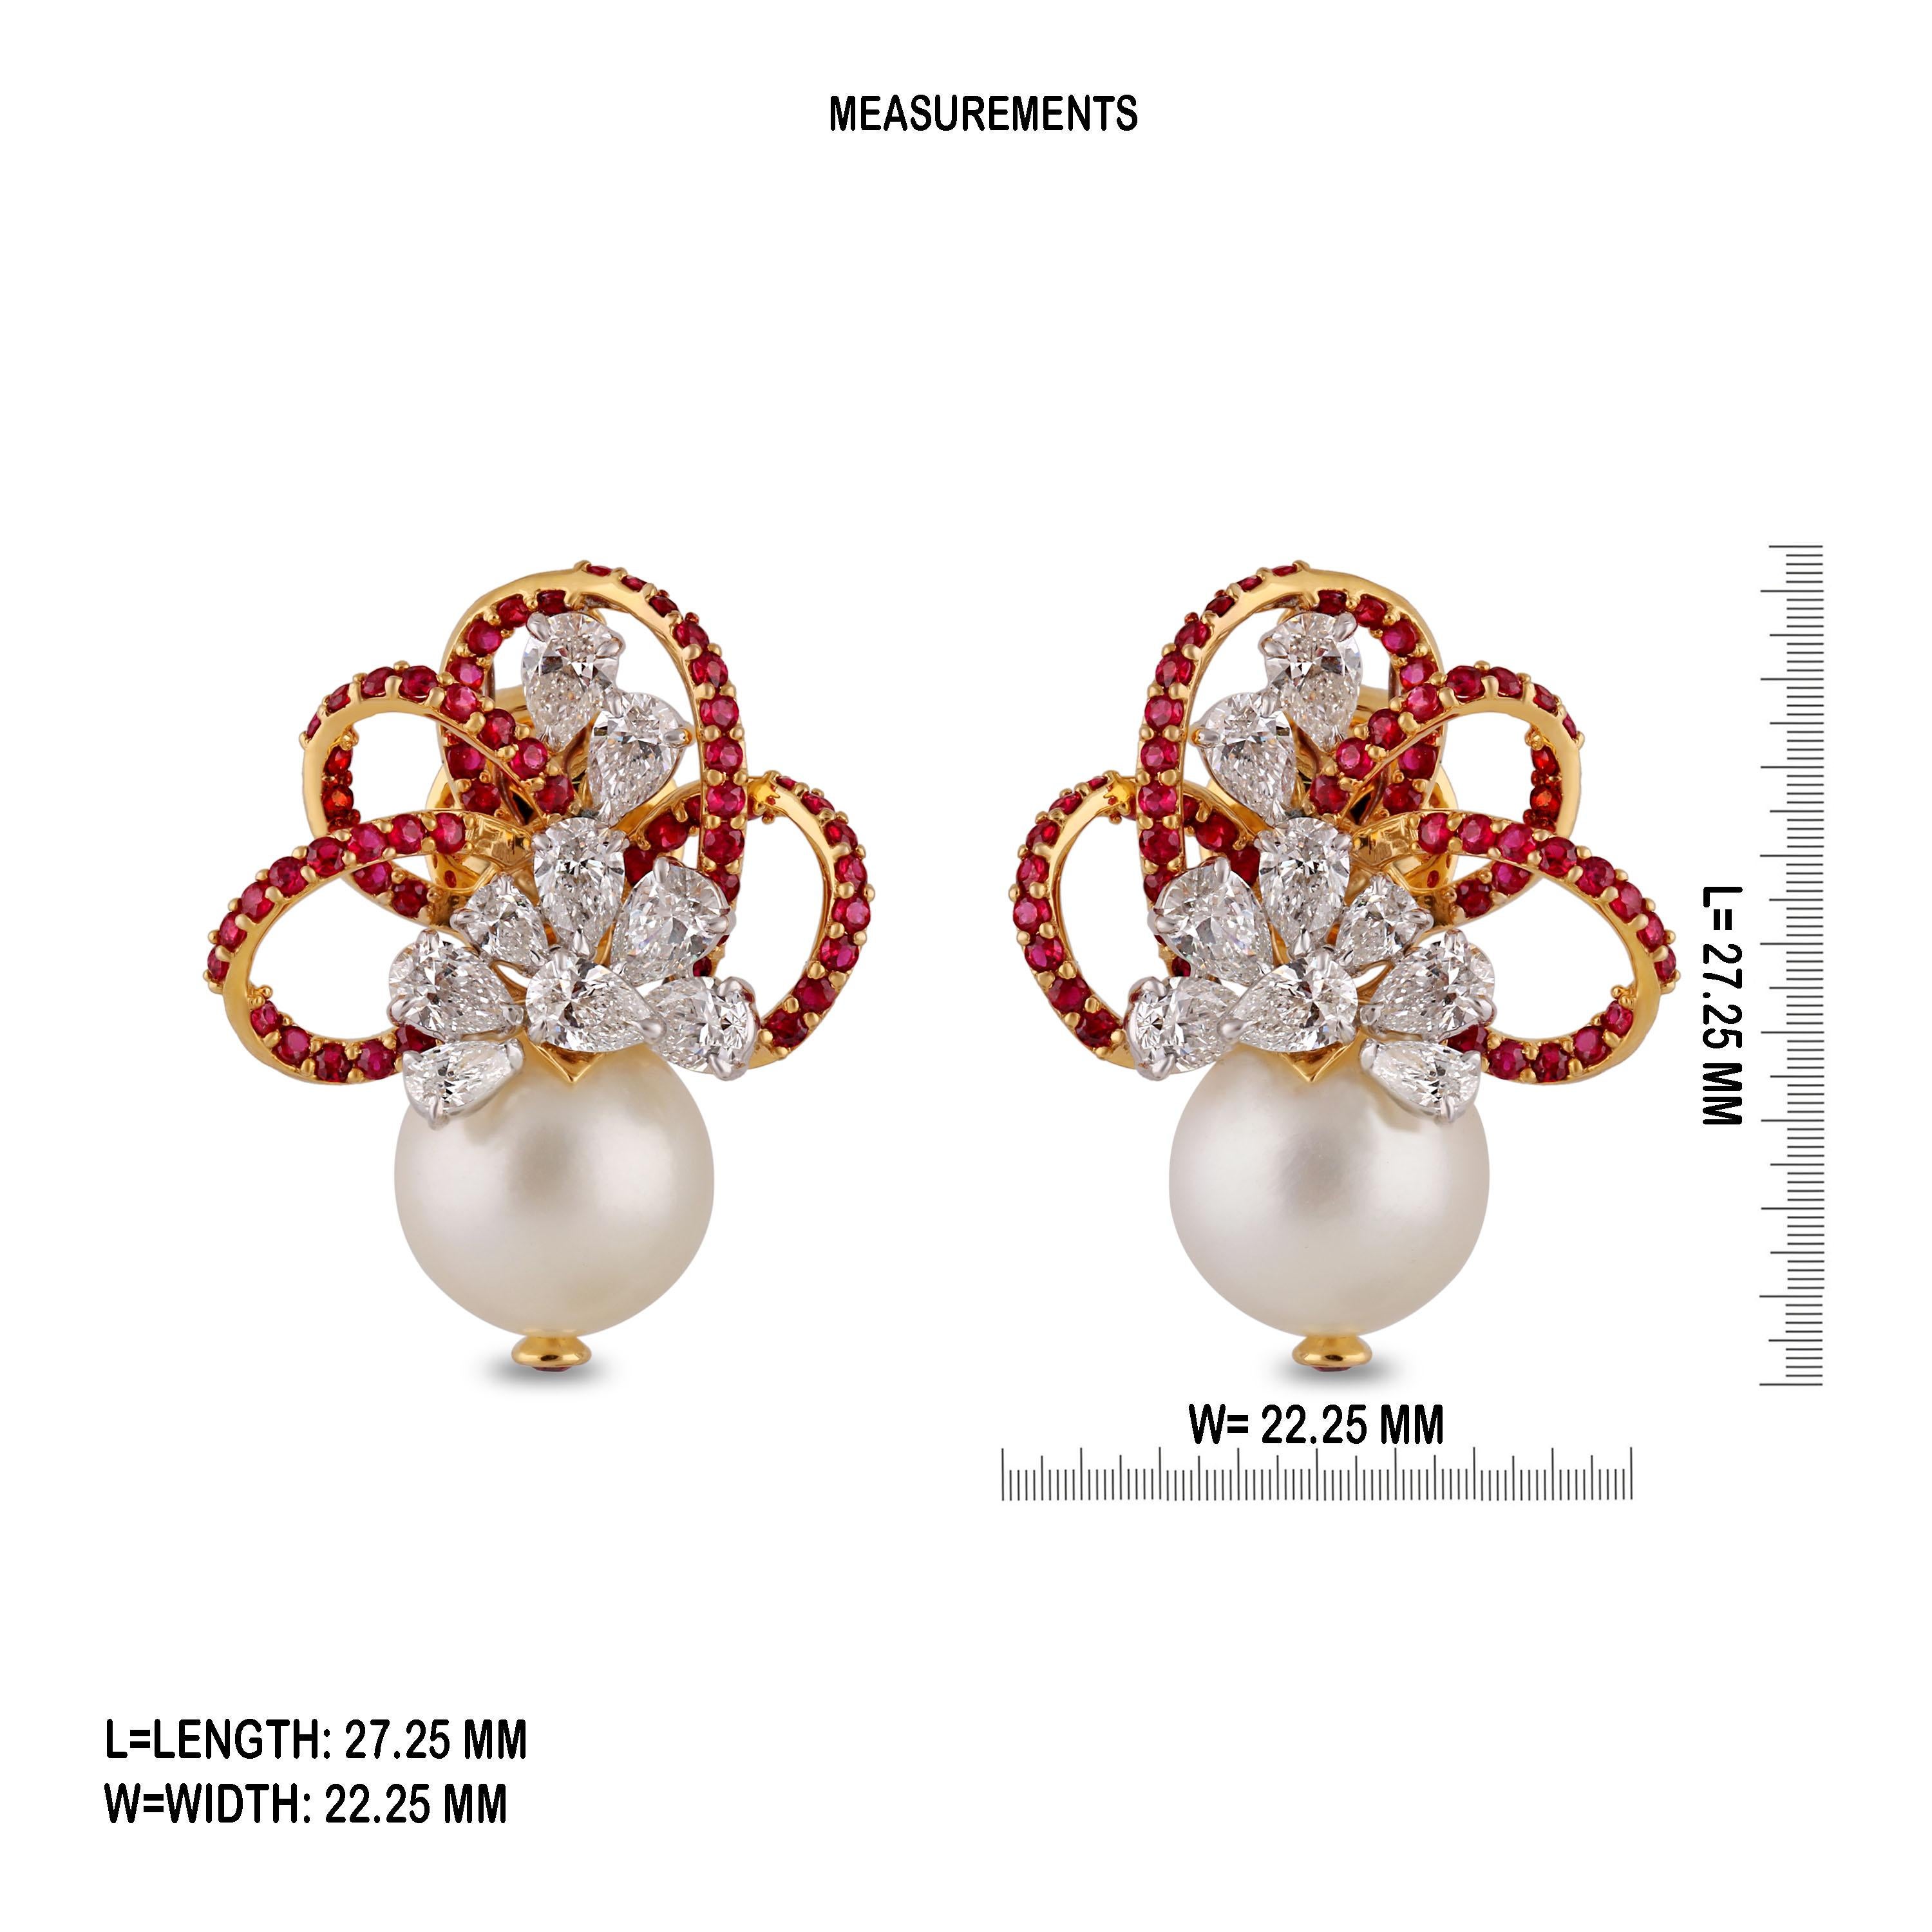 Pear Cut Studio Rêves Diamond and Rubies with Pearls Earrings in 18 Karat Gold For Sale